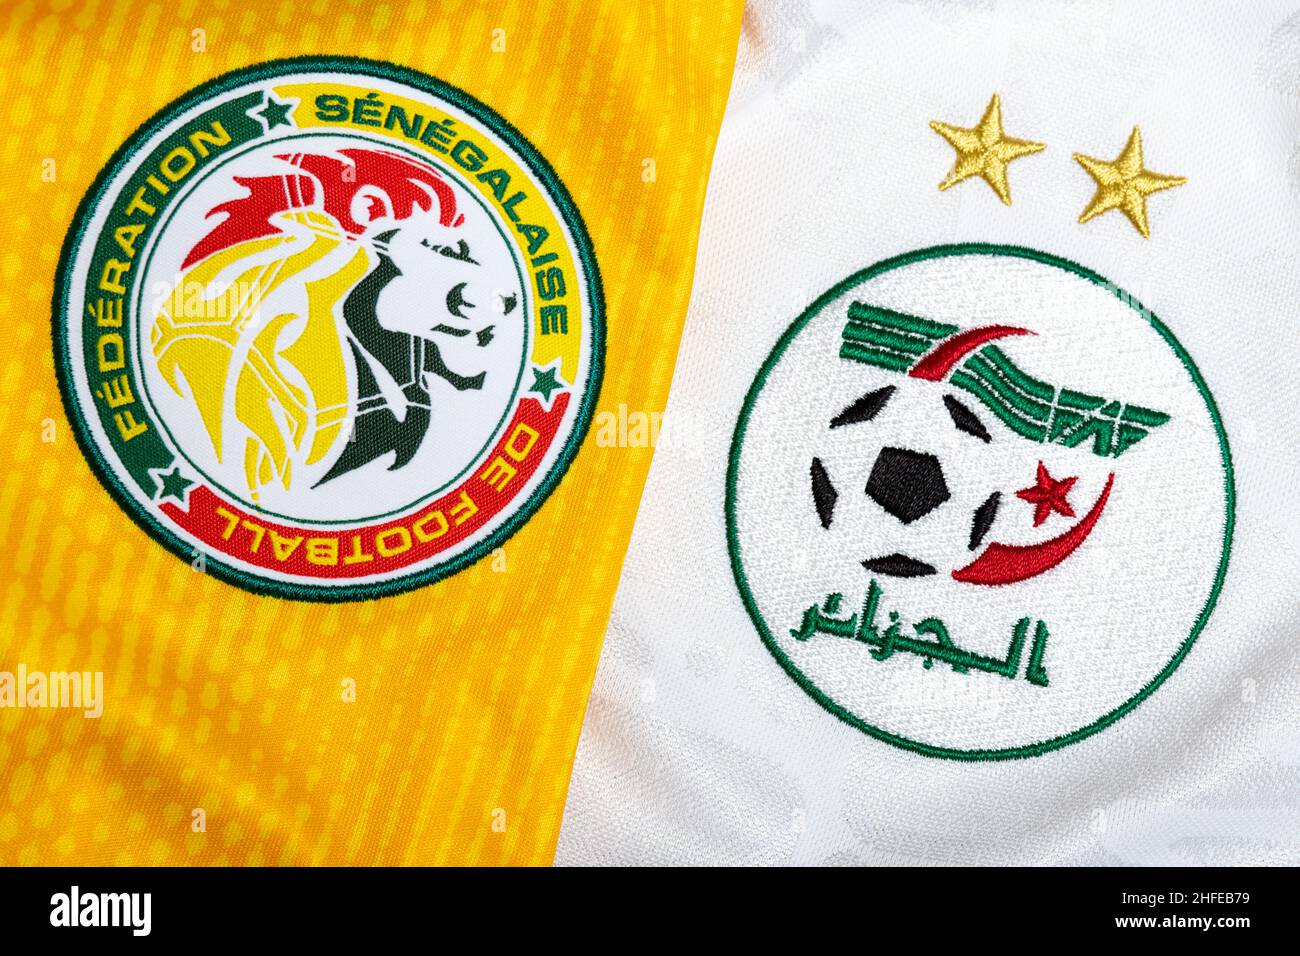 Close up of Senegal National Football team kit. Stock Photo